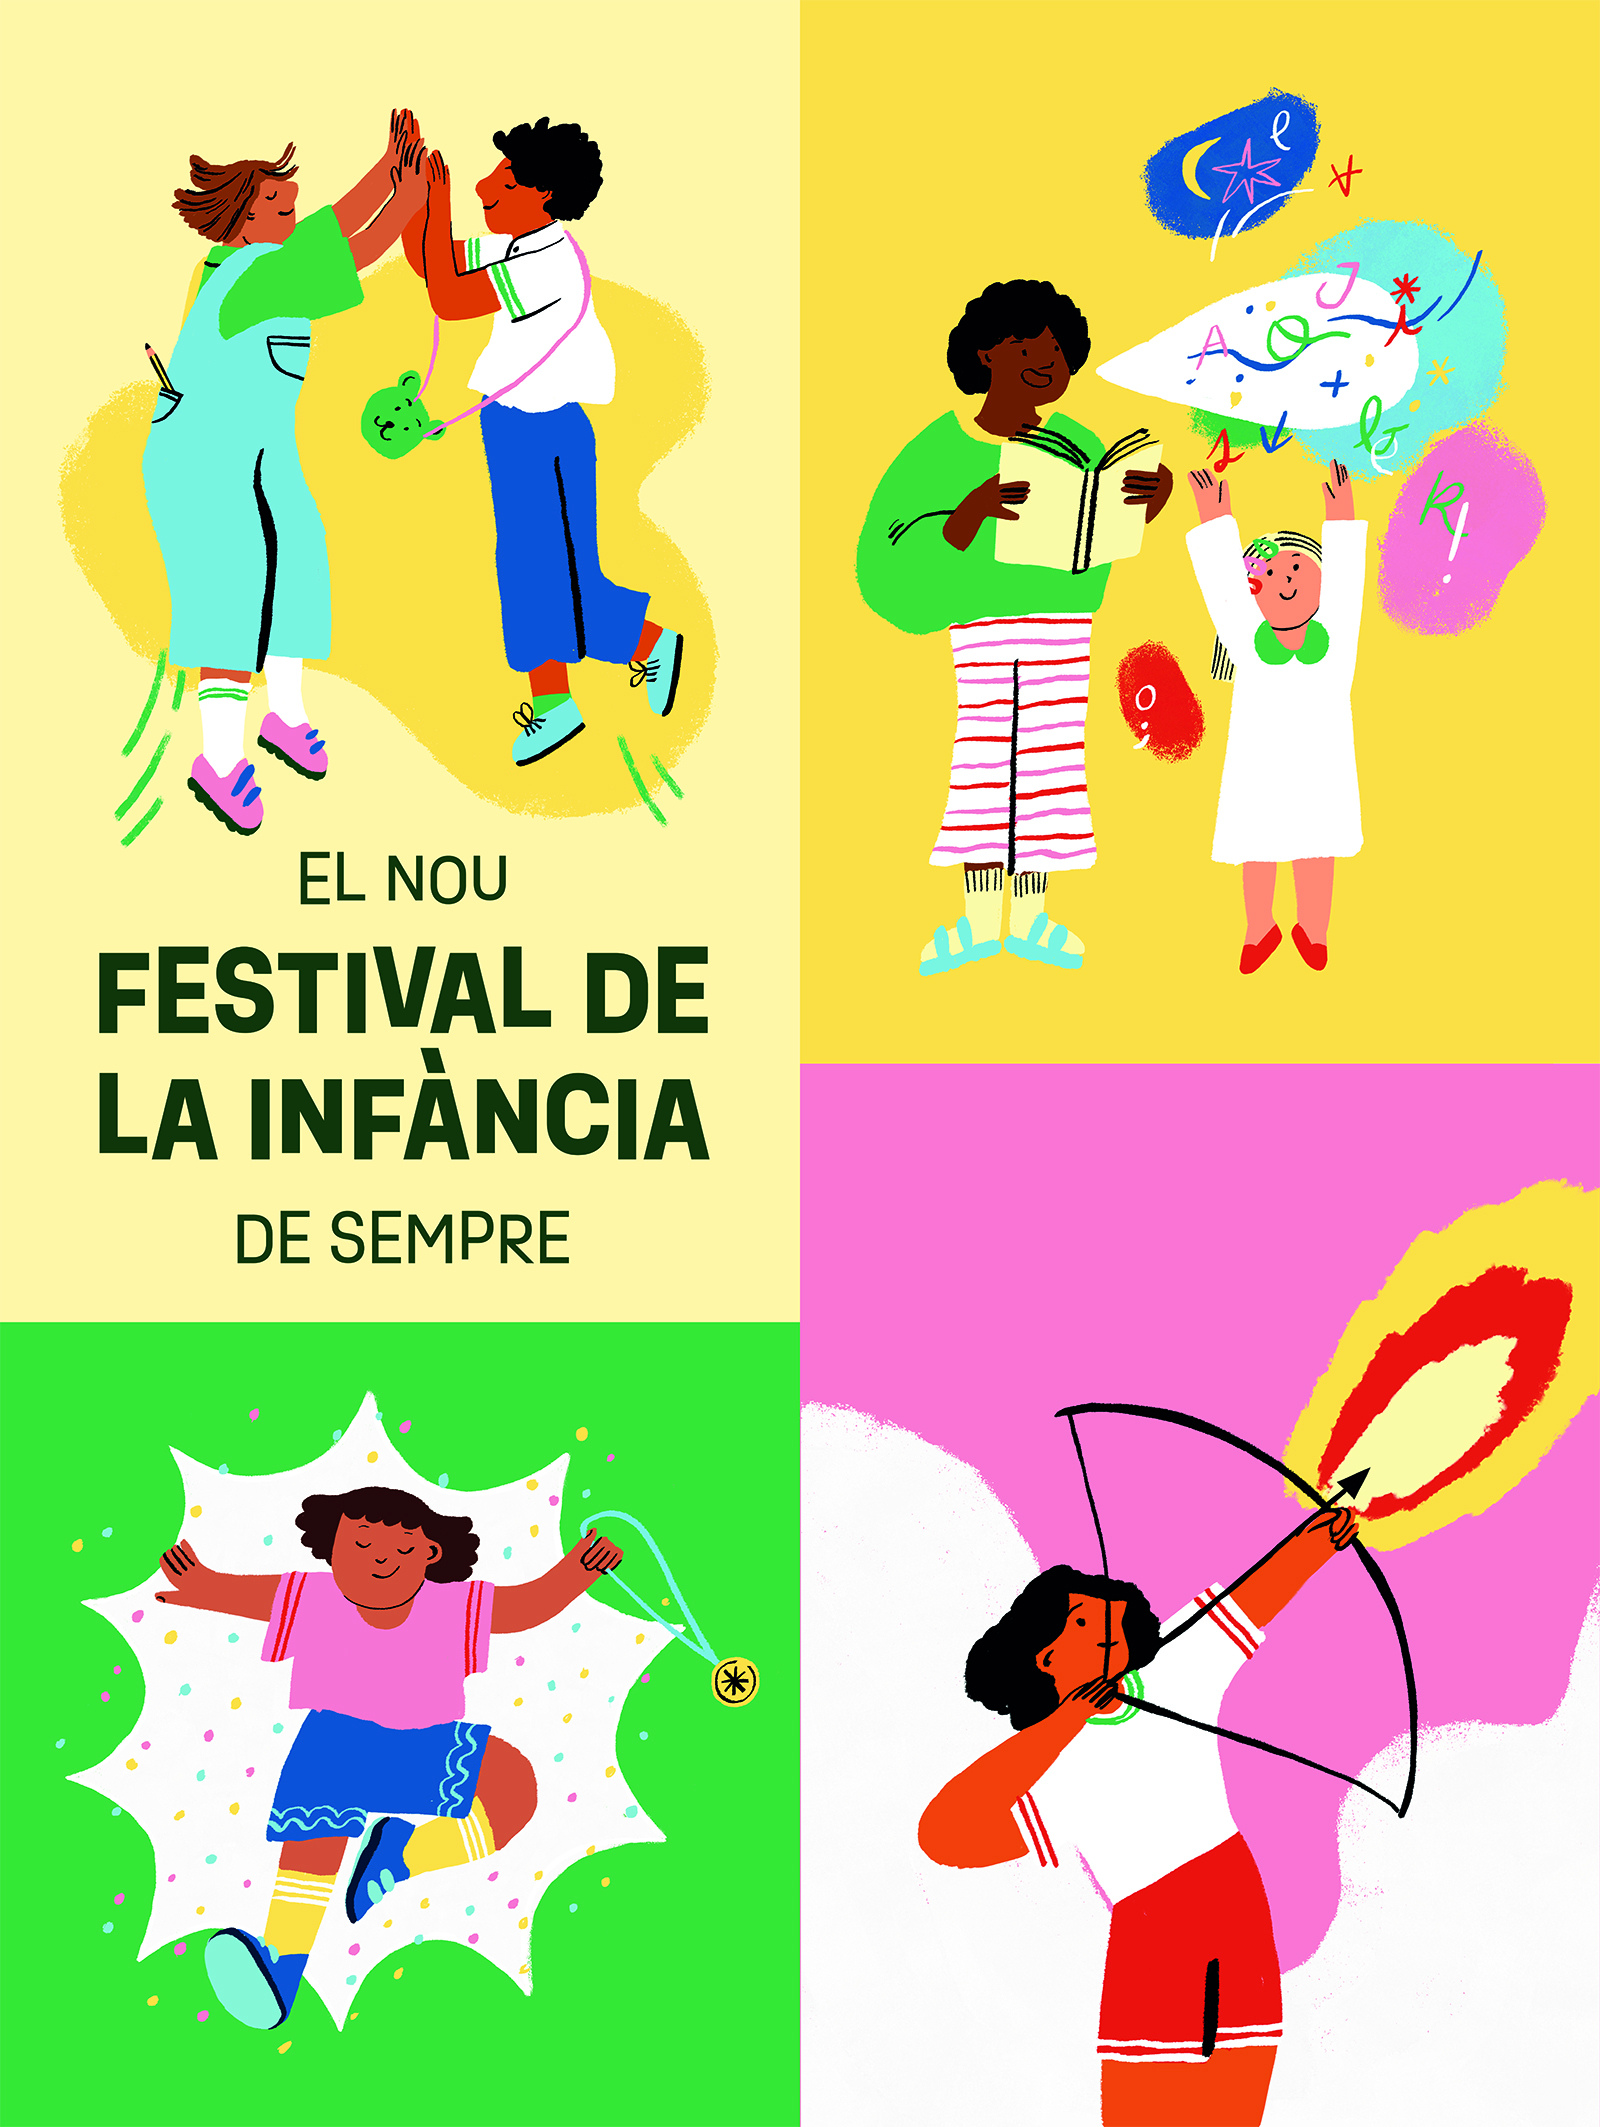 festival-infancia-barcelona-children-playing-reading-jumping-illustration-banderola-1-violeta-noy